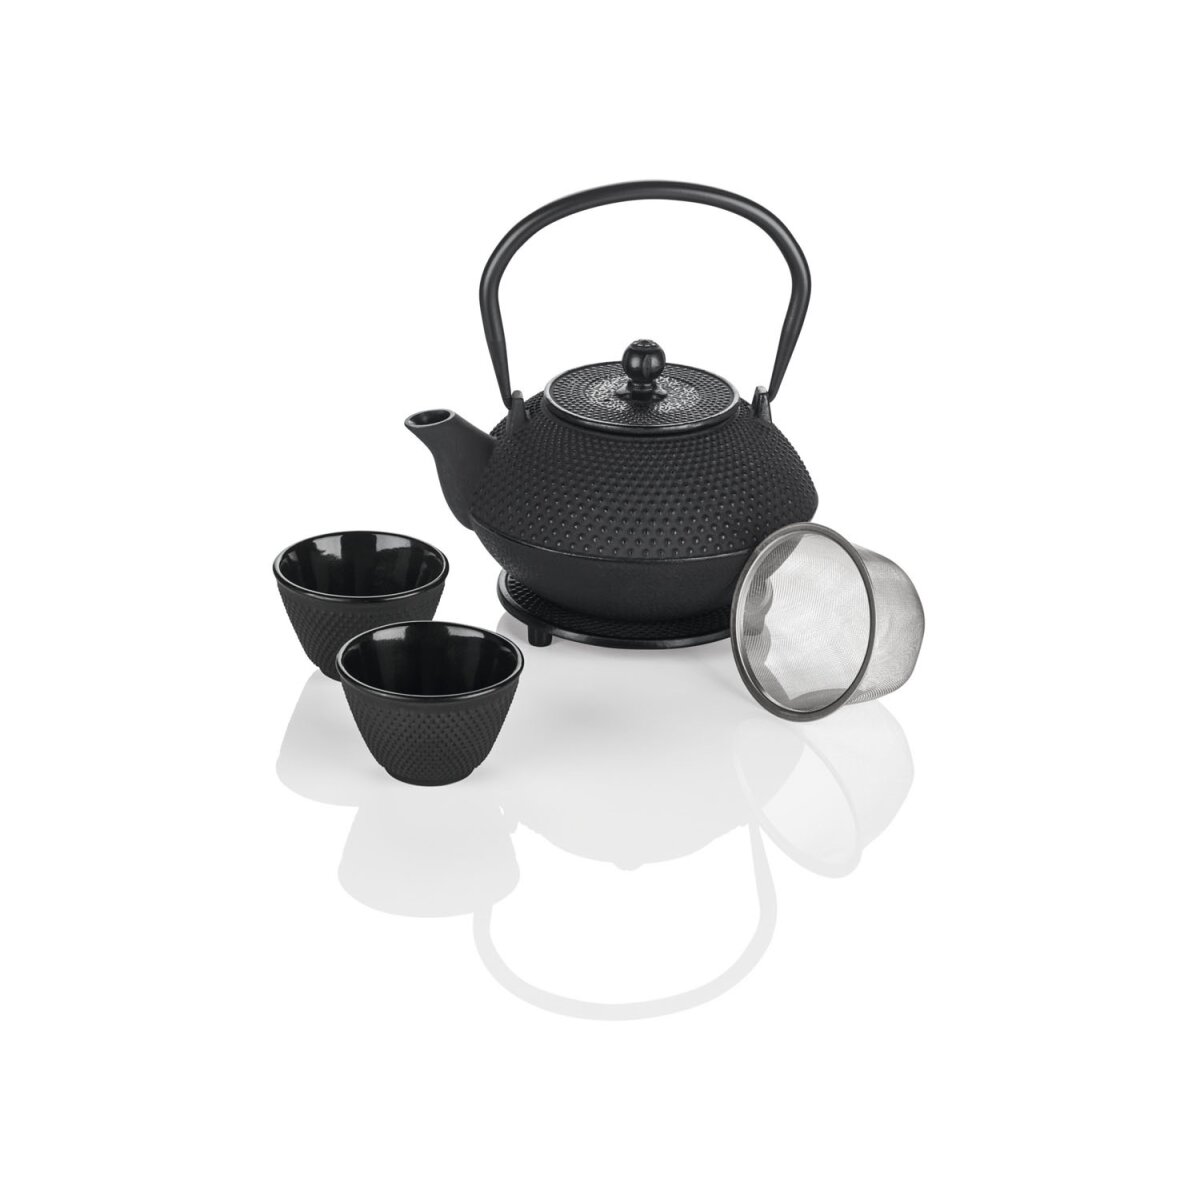 ERNESTO® Gusseisen-Tee-Set, 4-teilig, mit herausnehmbarem € Teefilter 20,99 - gut, B-Ware sehr